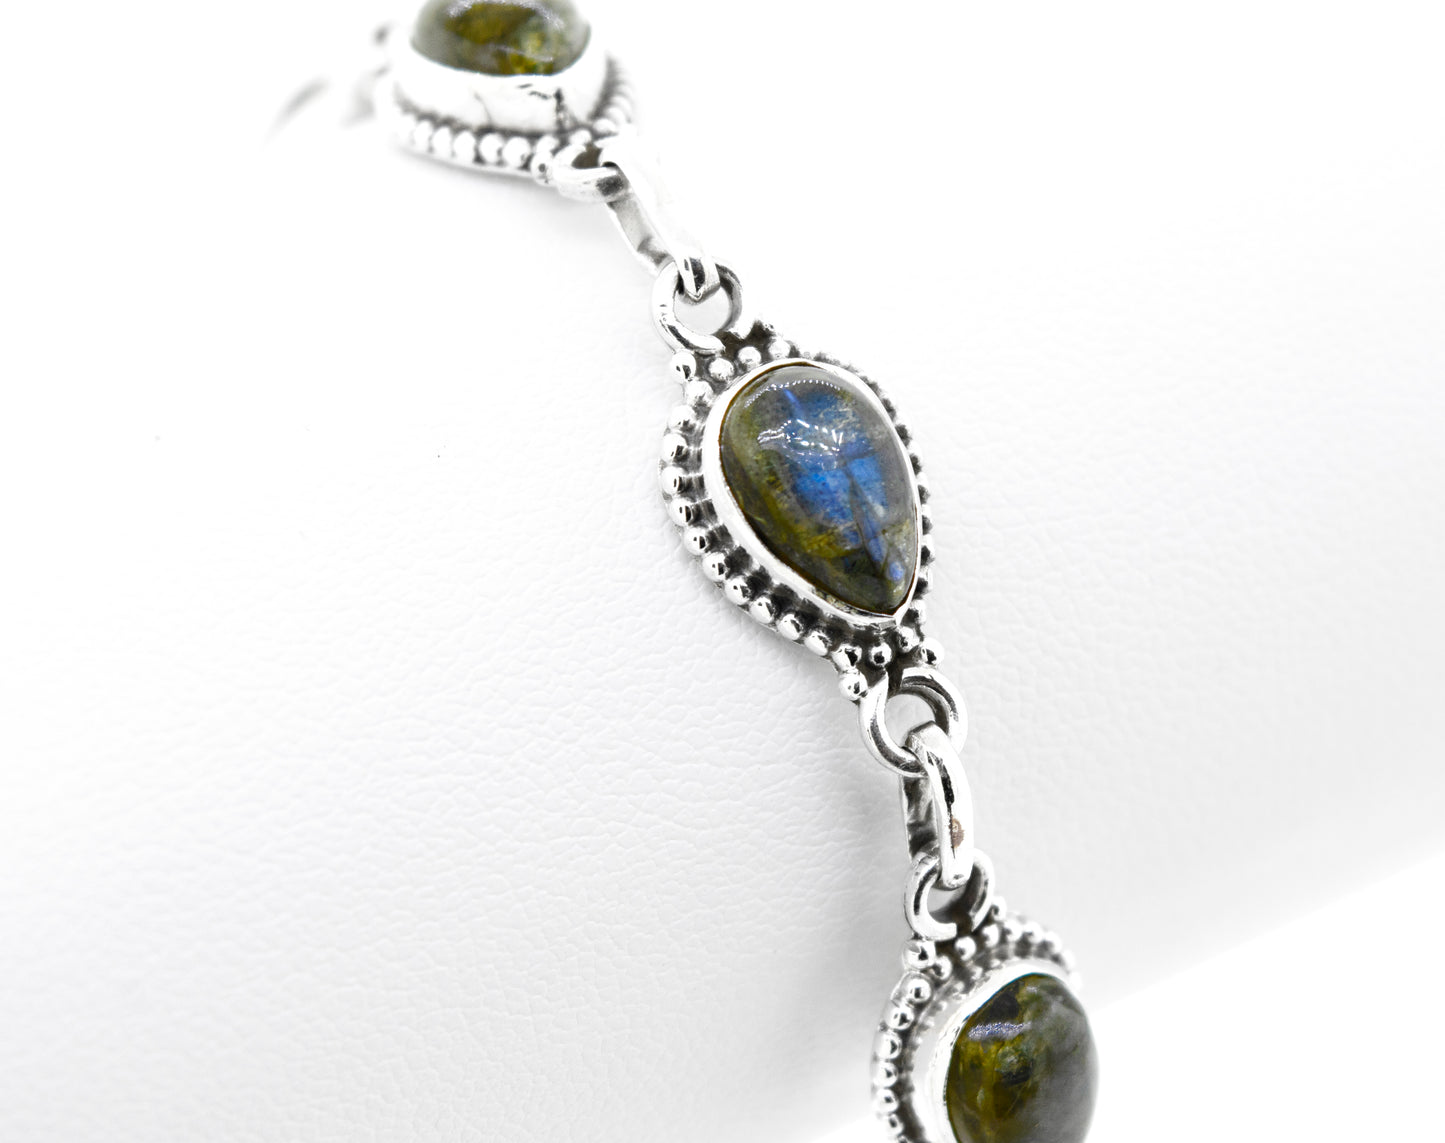 A vibrant silver Super Silver bracelet adorned with teardrop-shaped blue labradorite stones.